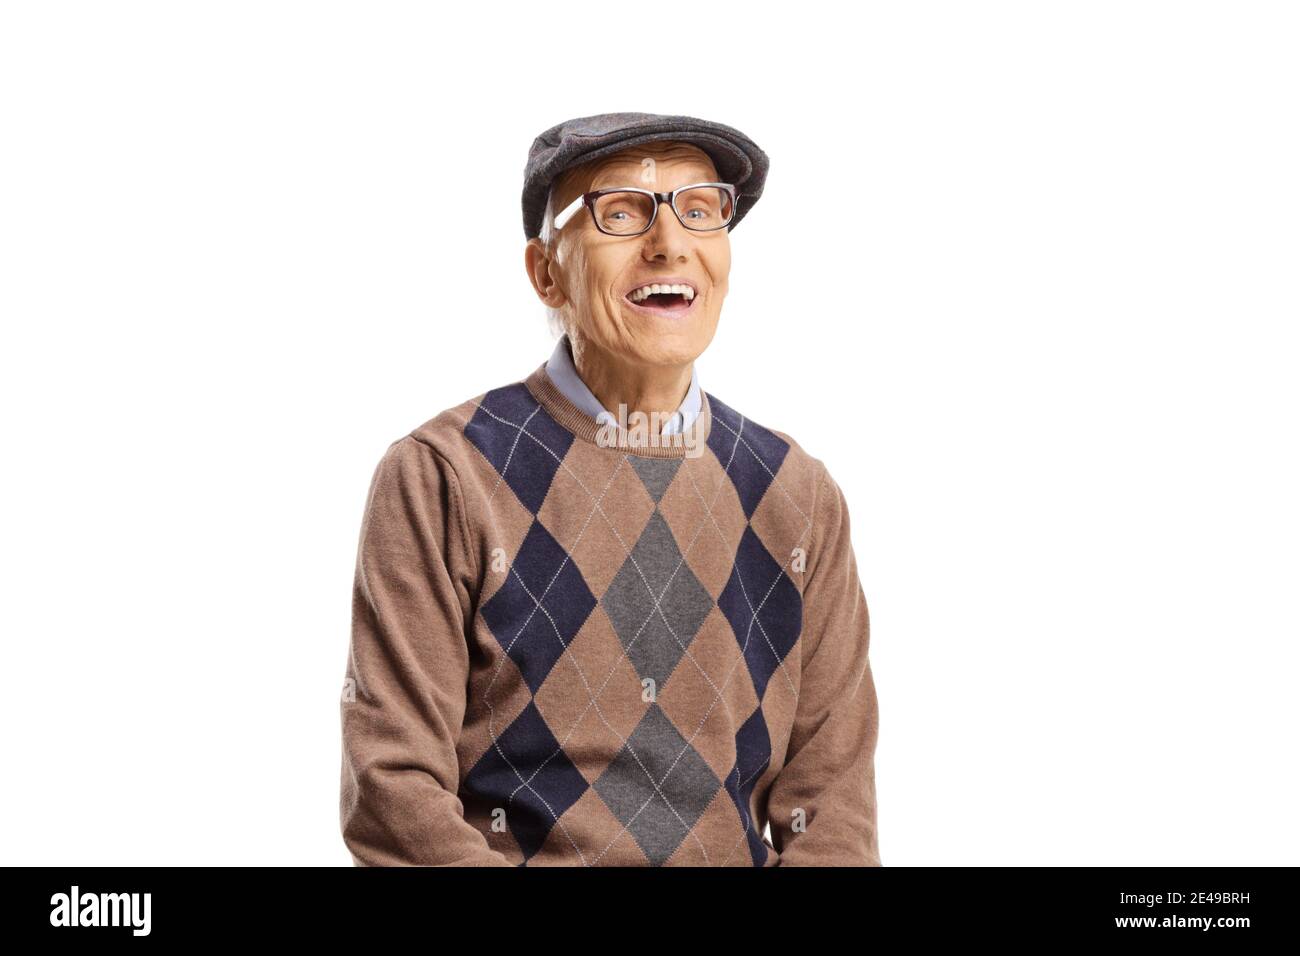 Cheerful elderly gentleman smiling isolated on white background Stock Photo